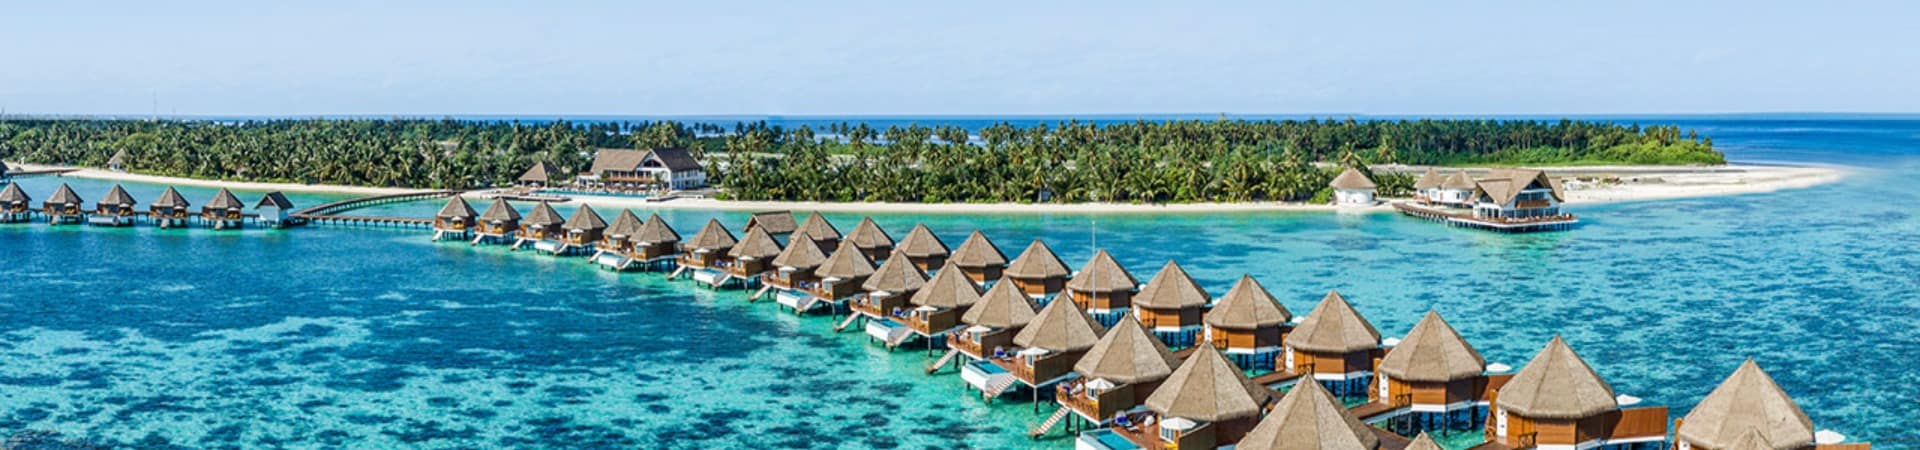 Mercure maldives kooddoo vista panoramica